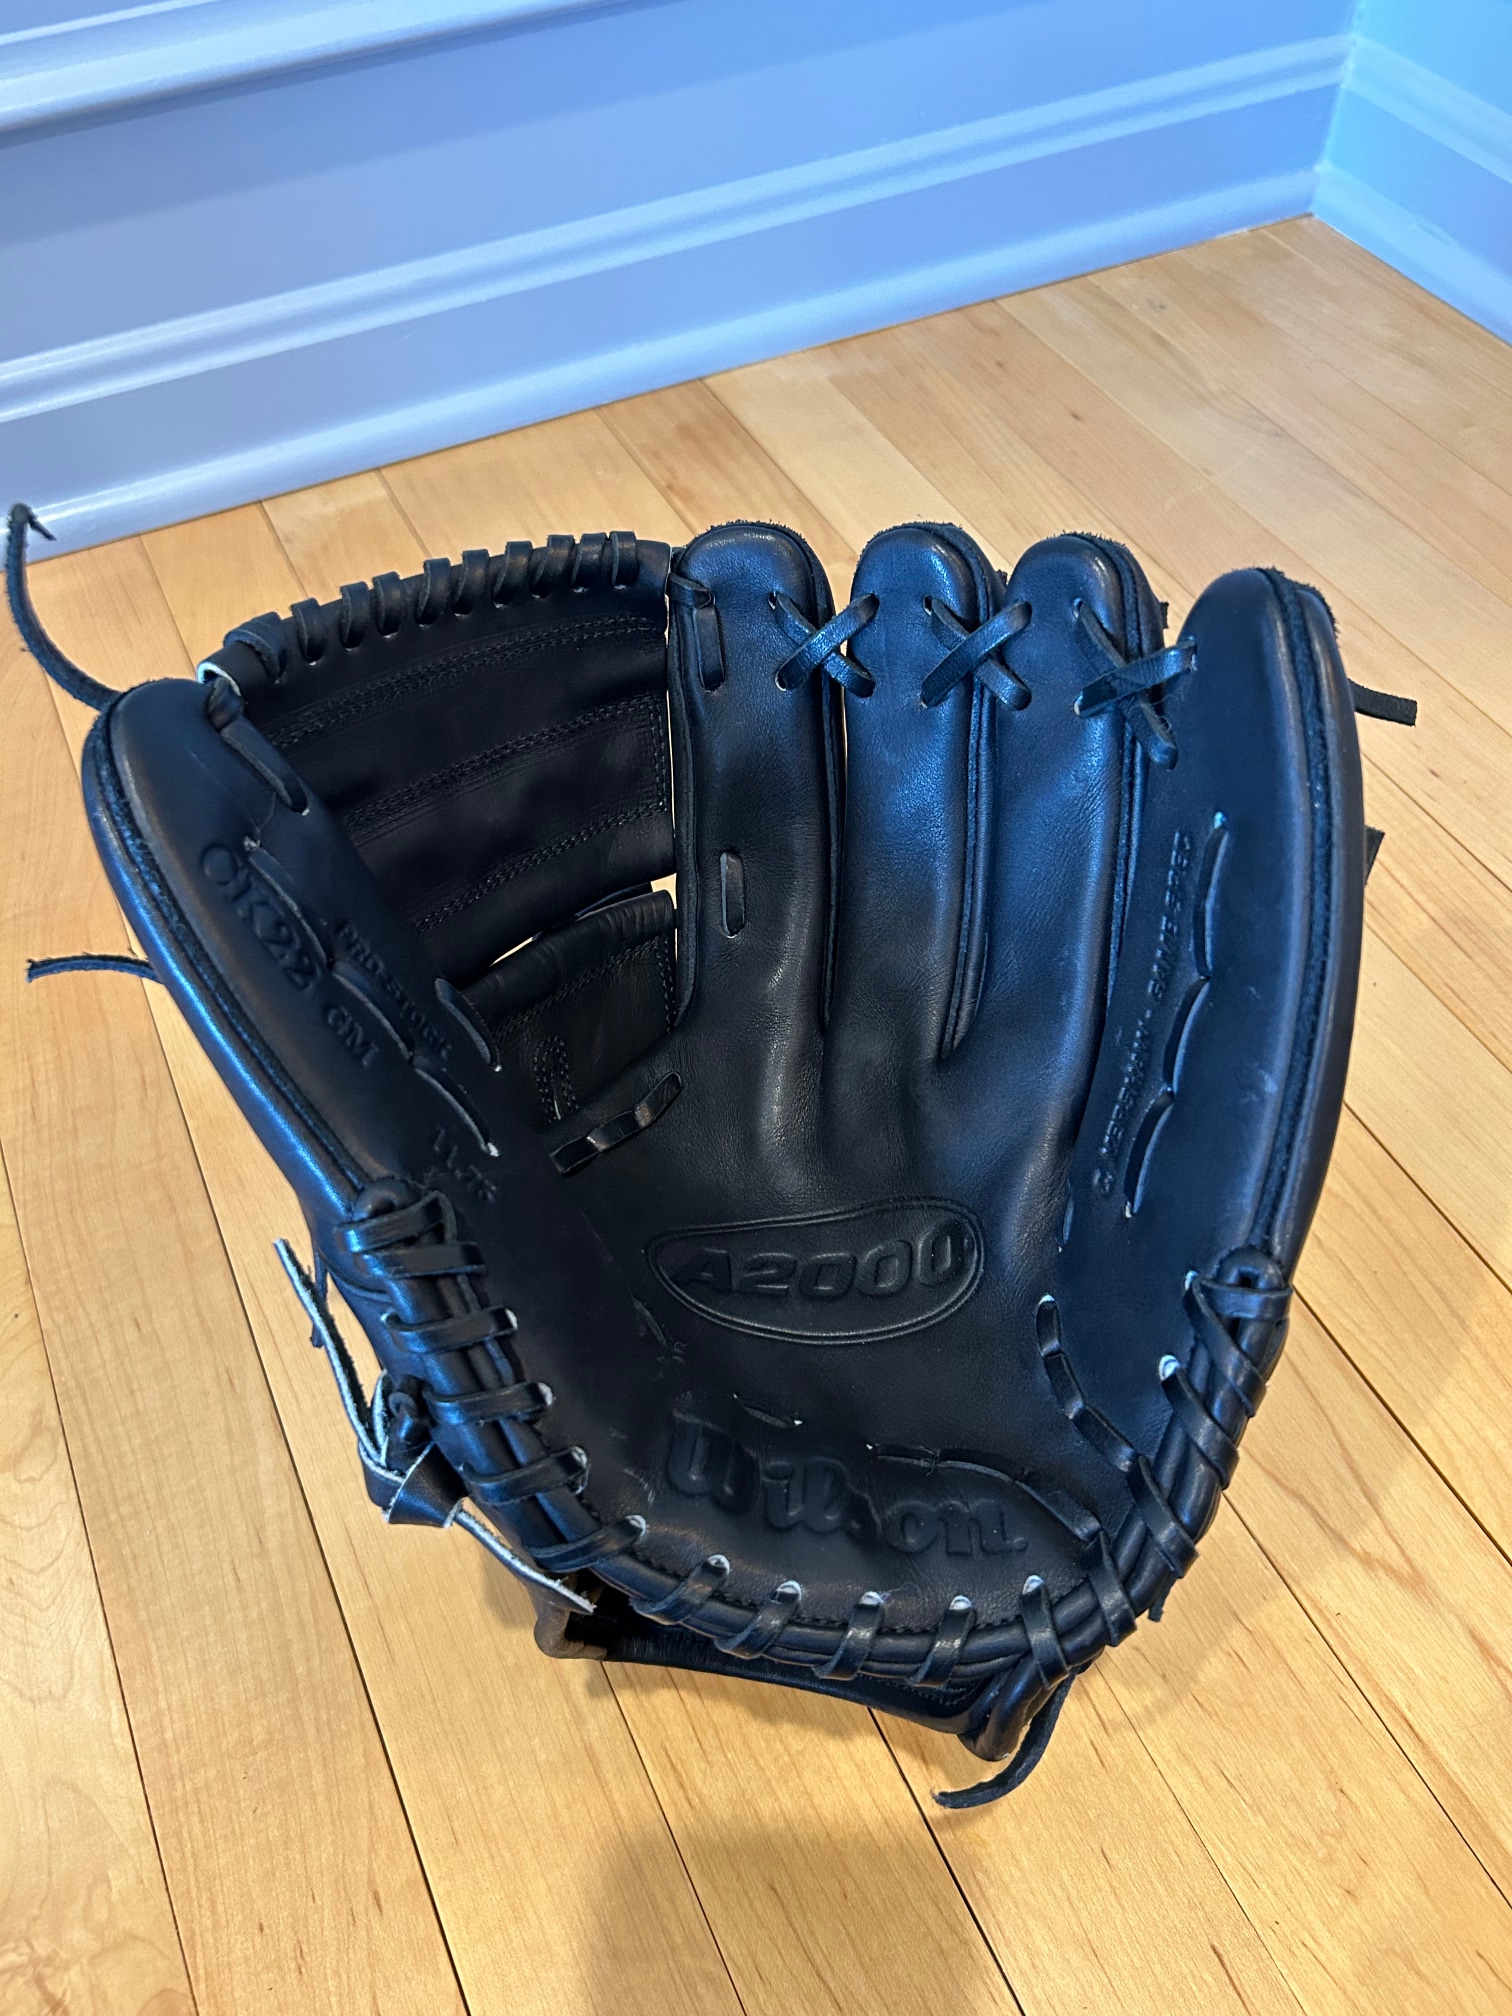 New Right Hand Throw Wilson A2000 Pitcher's CK22 Baseball Glove 11.75" Clayton Kershaw model